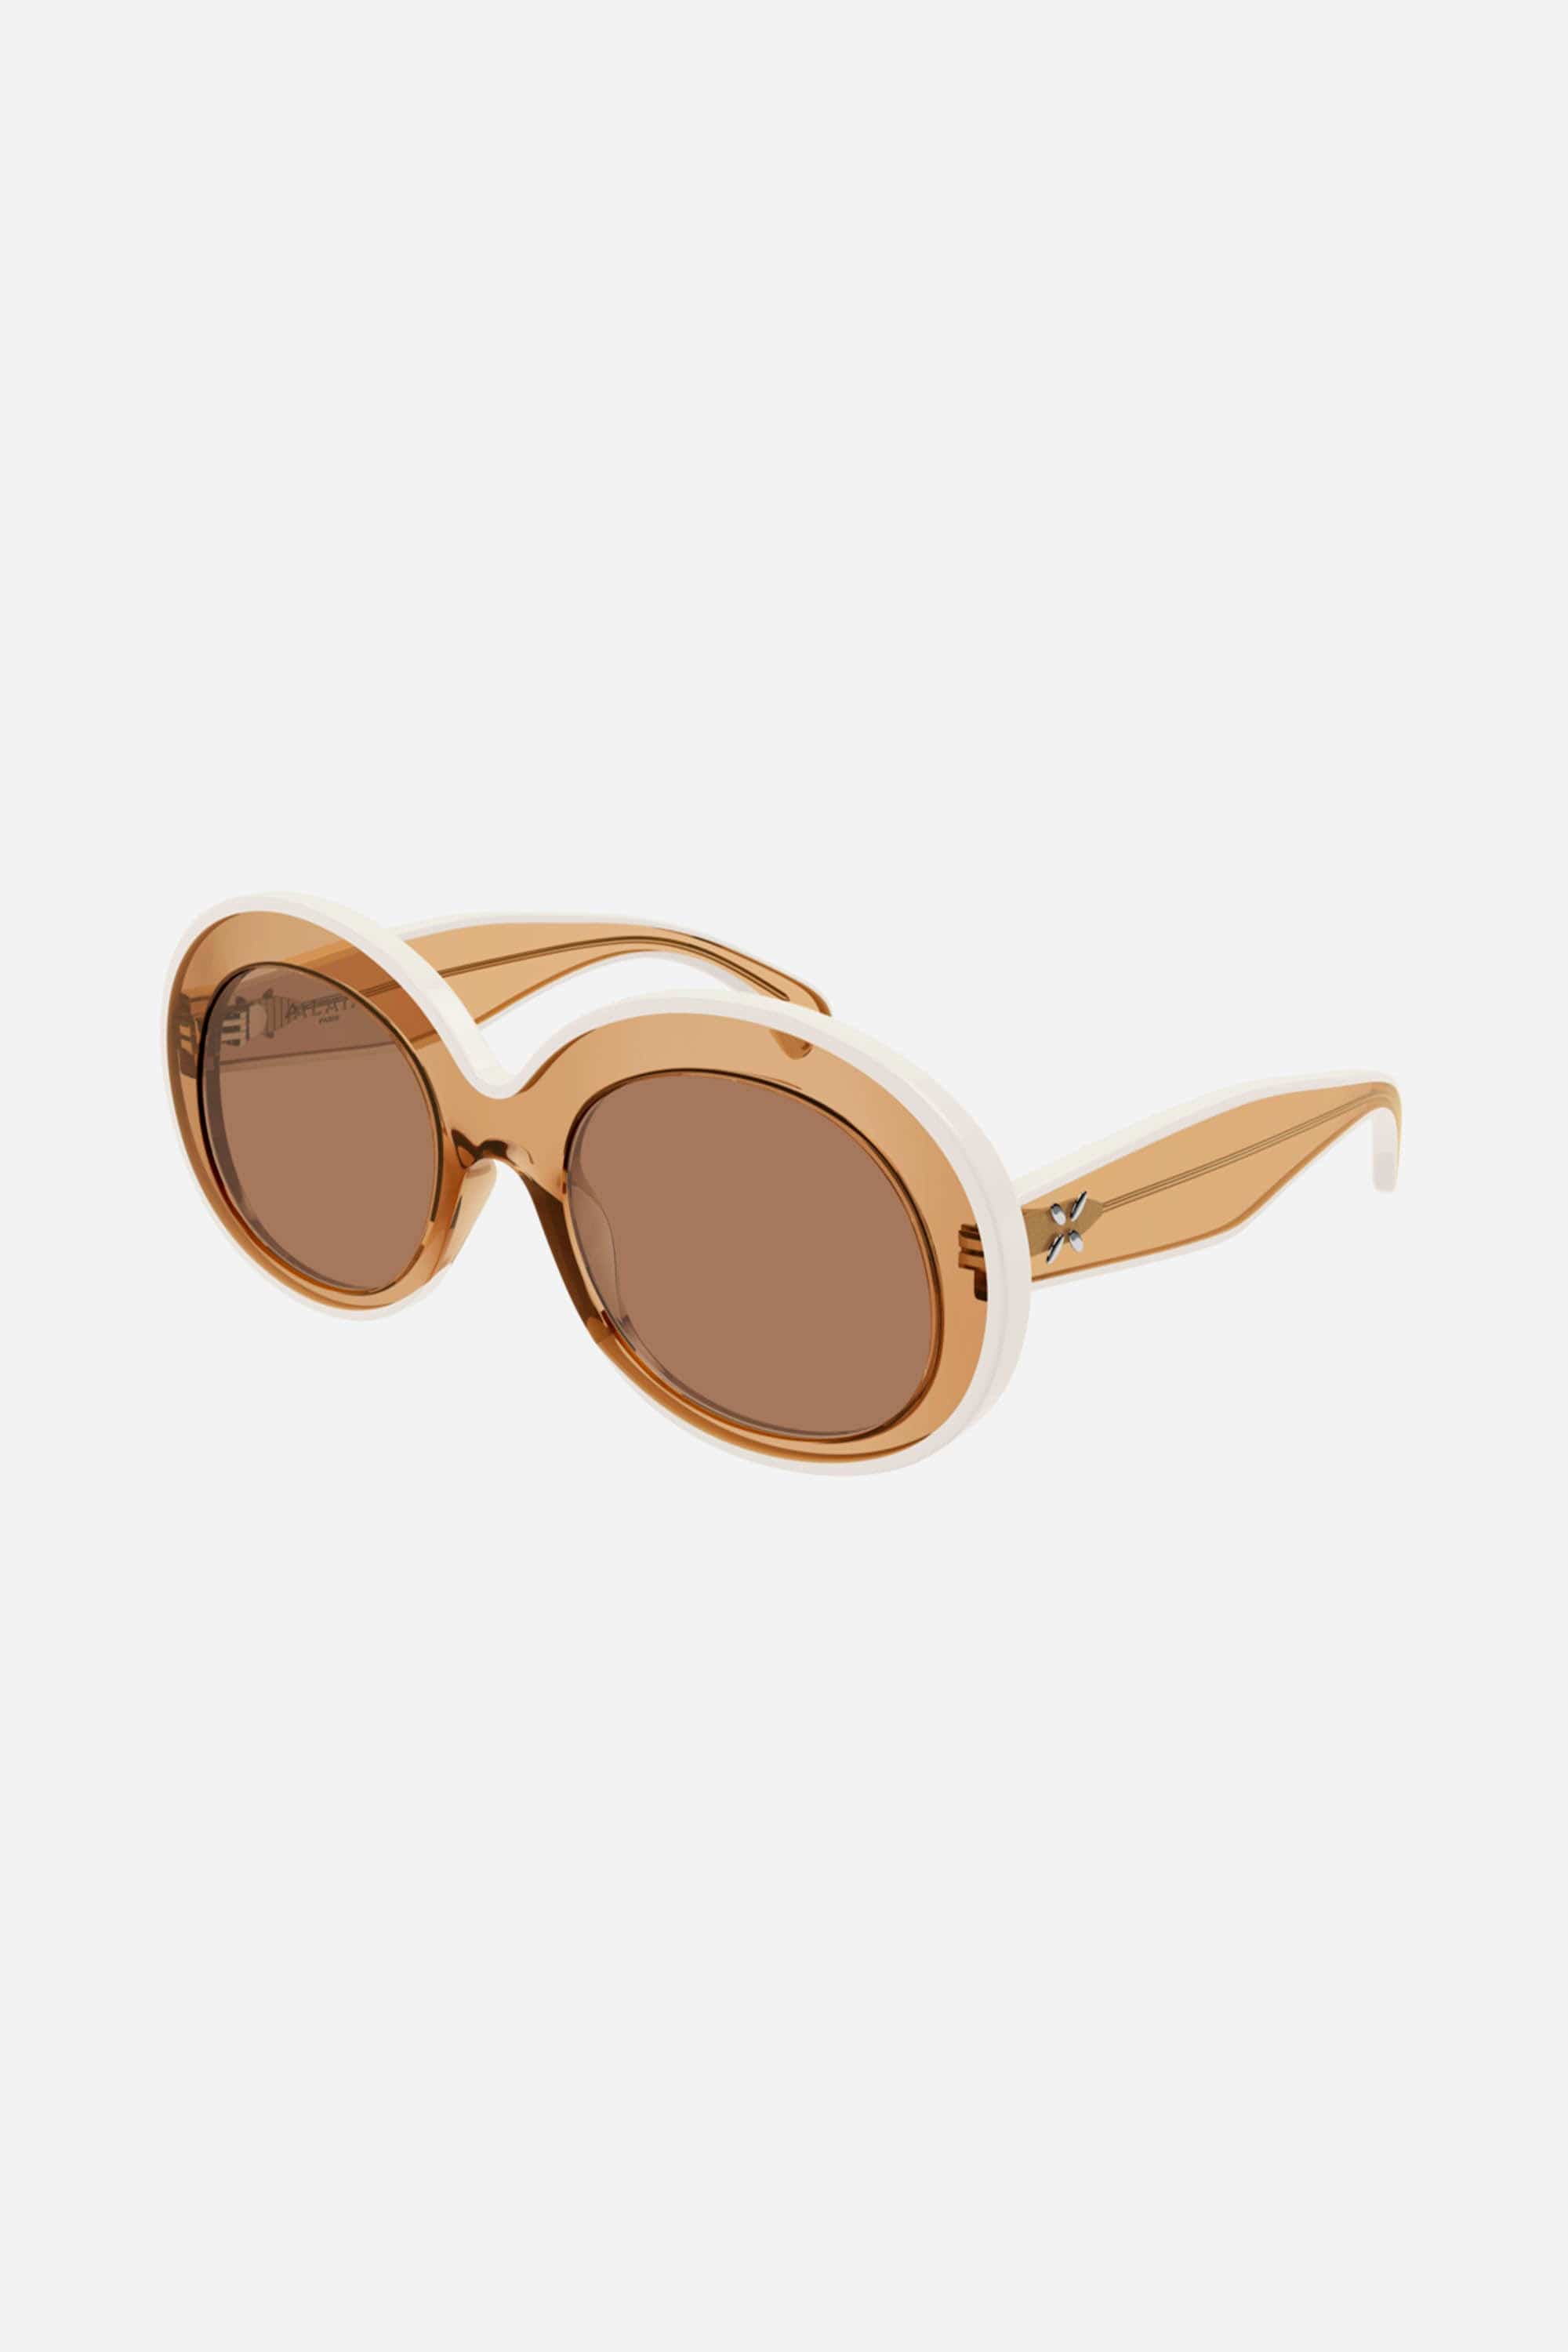 Alaia oval cream and crystal sunglasses - Eyewear Club